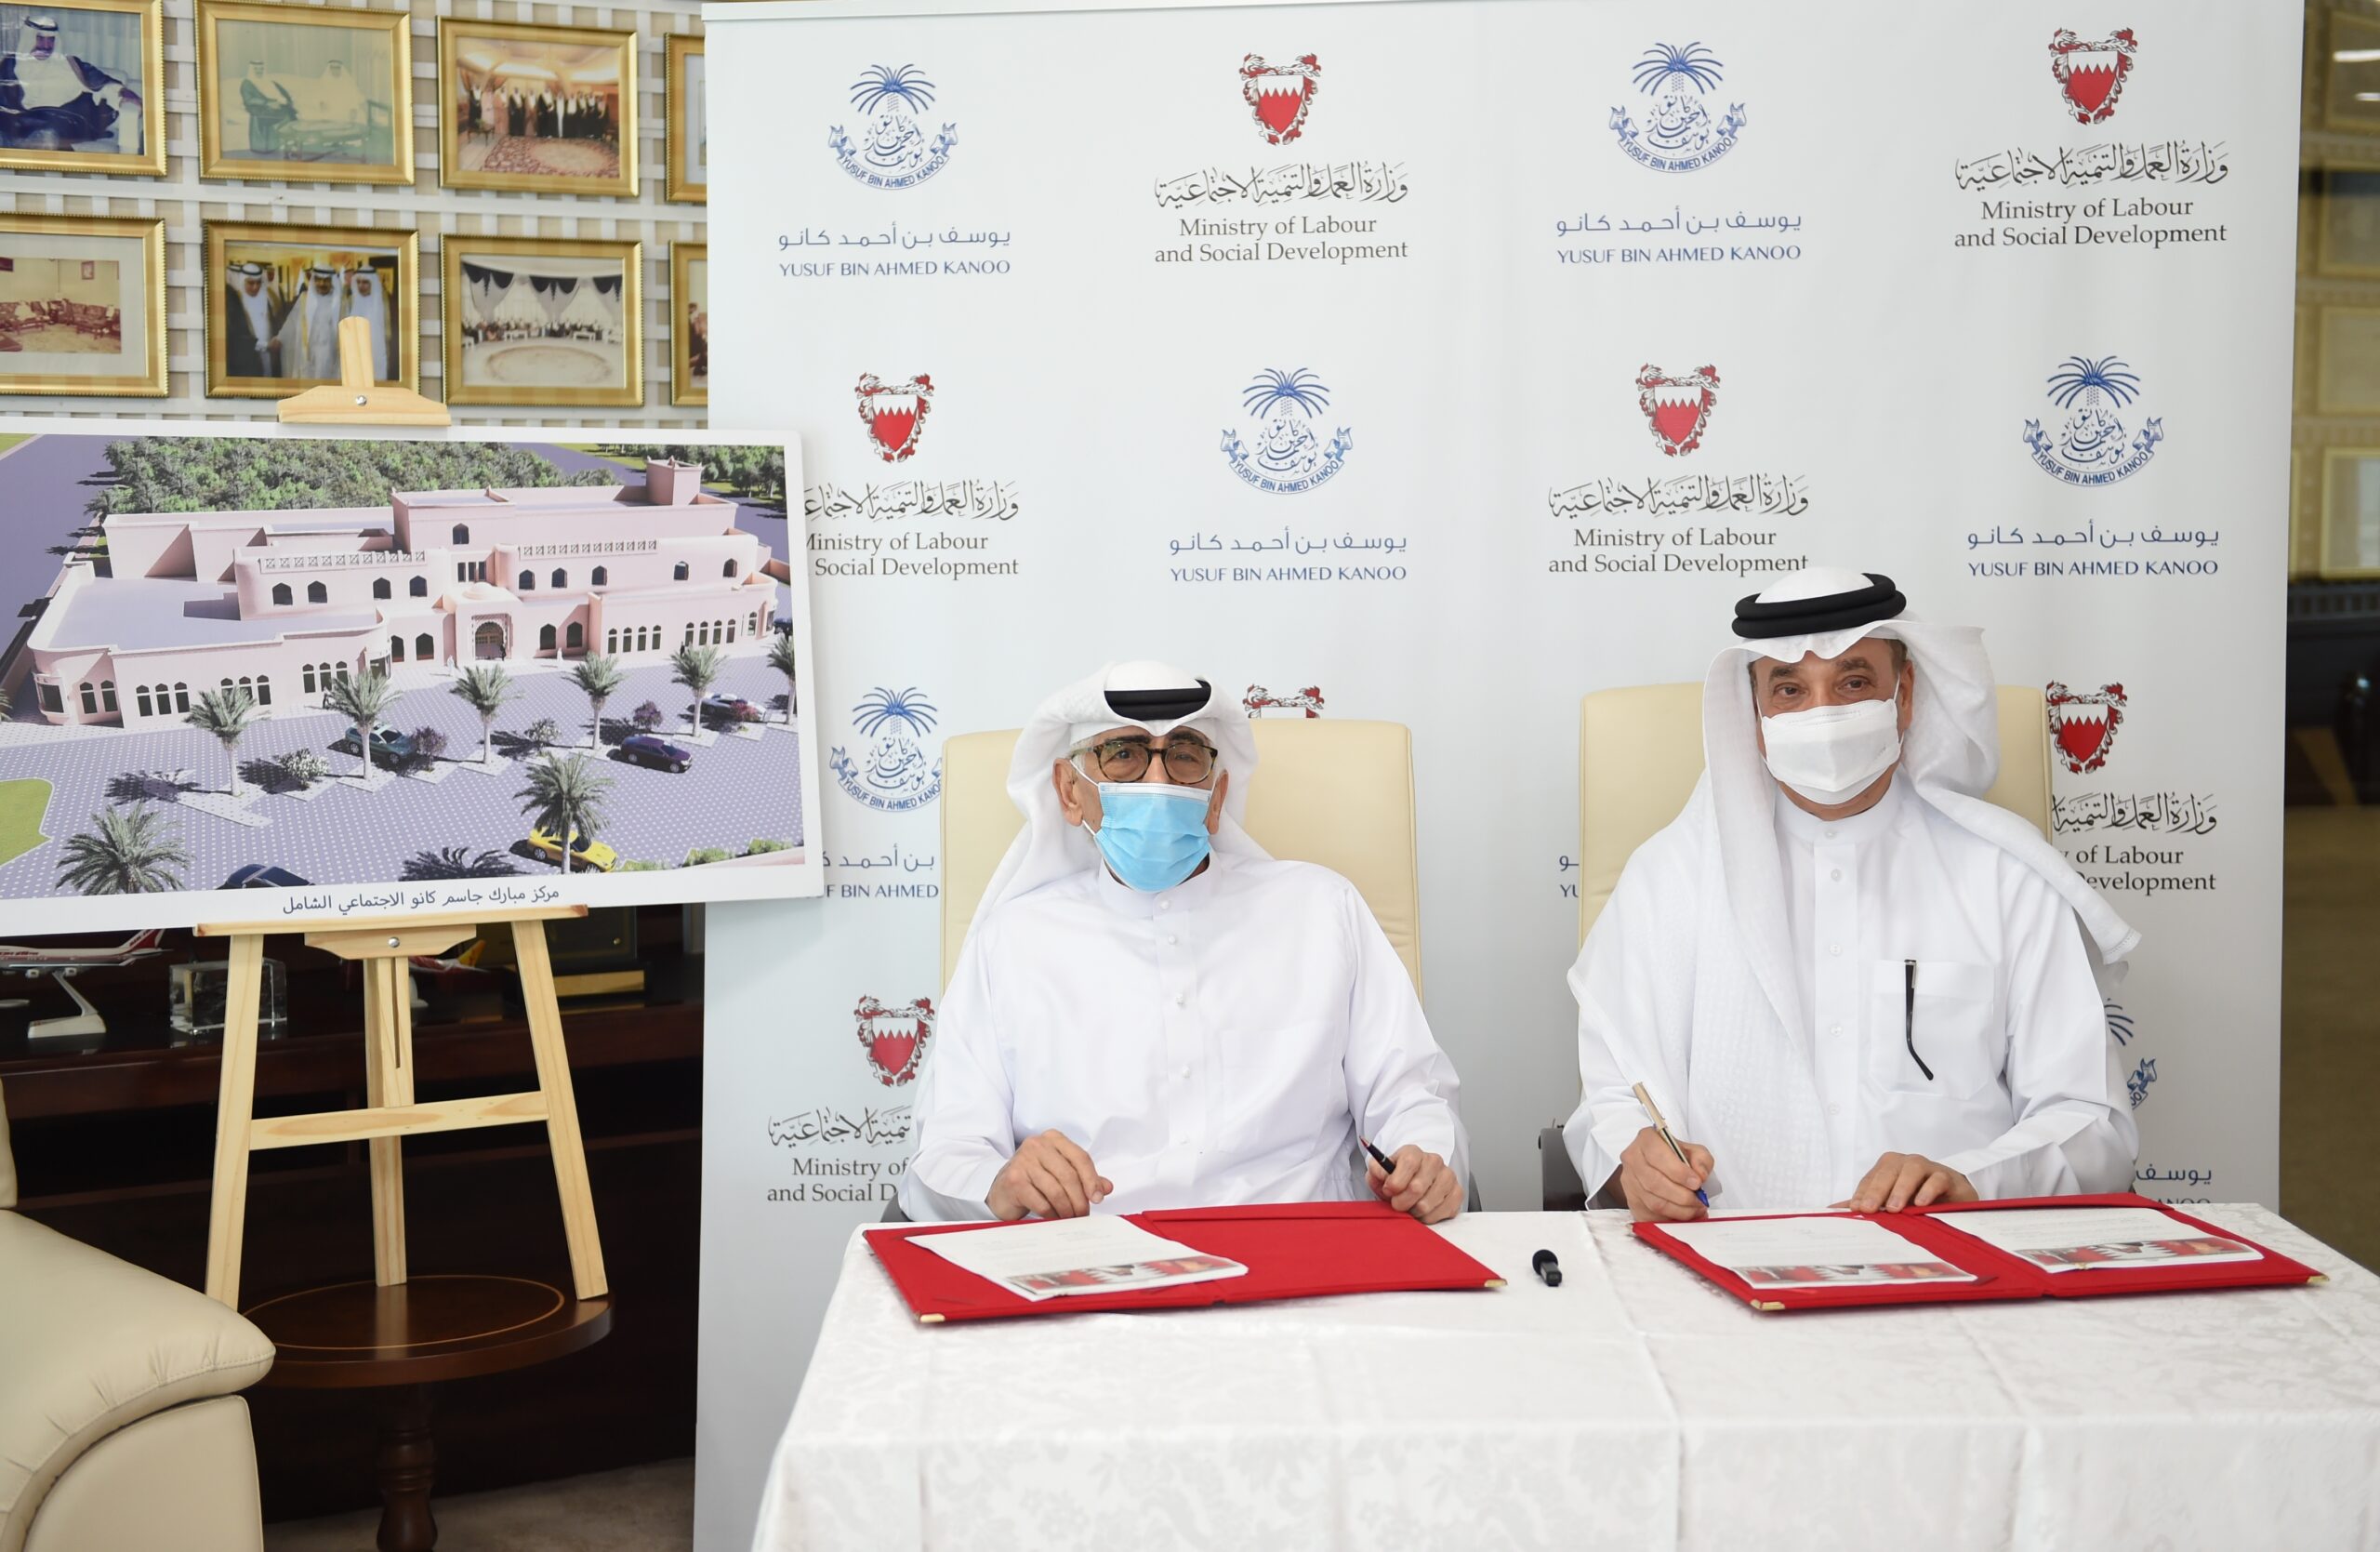 Labor Ministry, Yusuf bin Ahmed Kanoo Company sign social center agreement